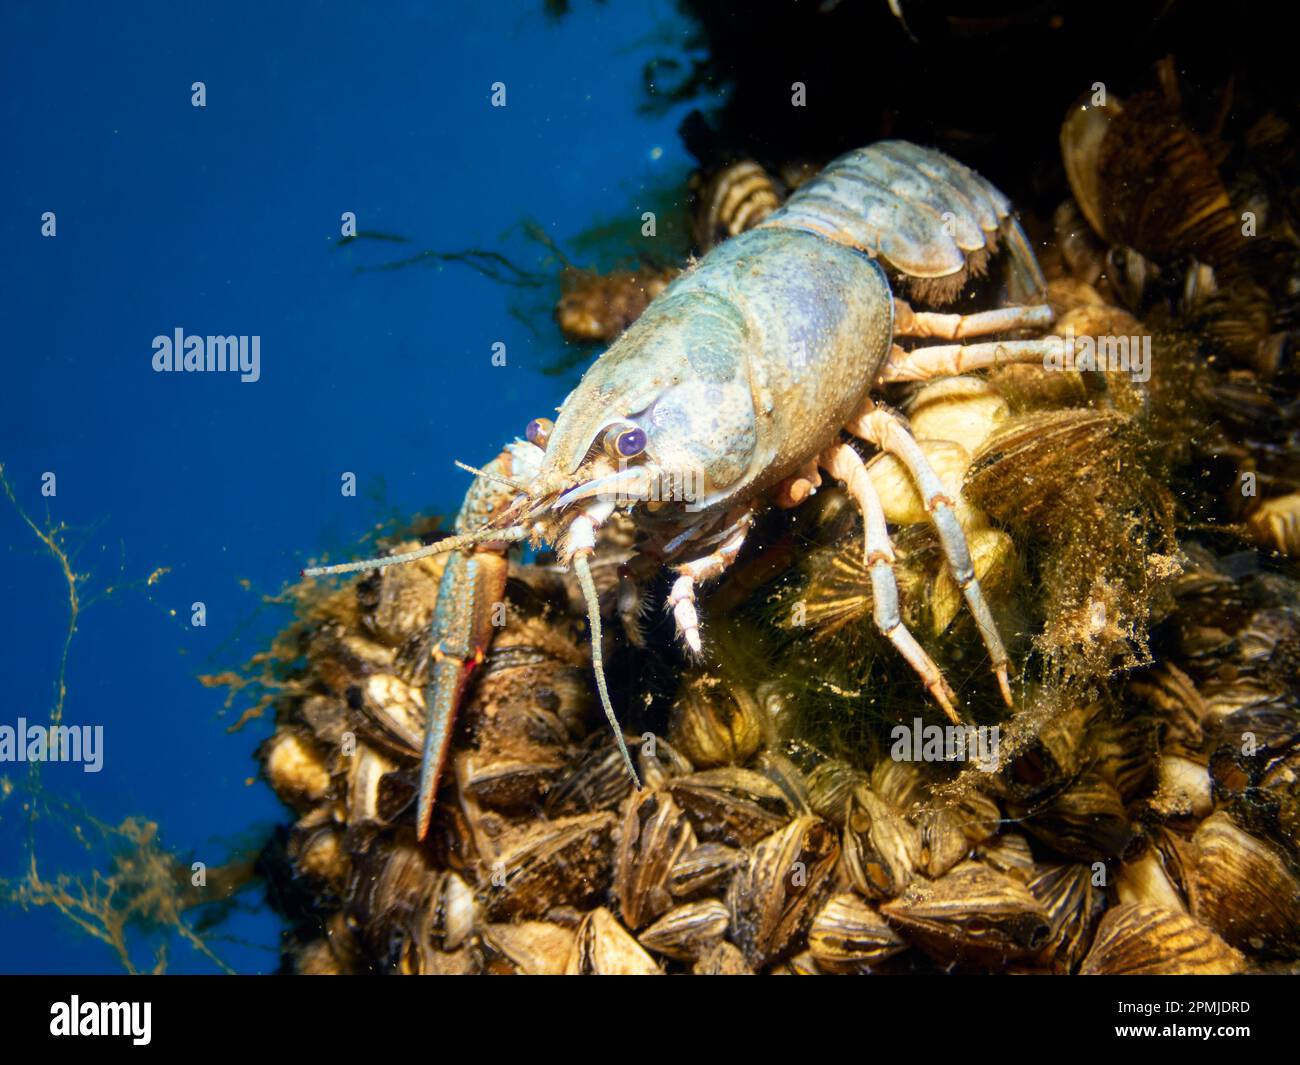 A European Crayfish (Astacus Astacus) in a lake. Underwater wildlife scene. Stock Photo